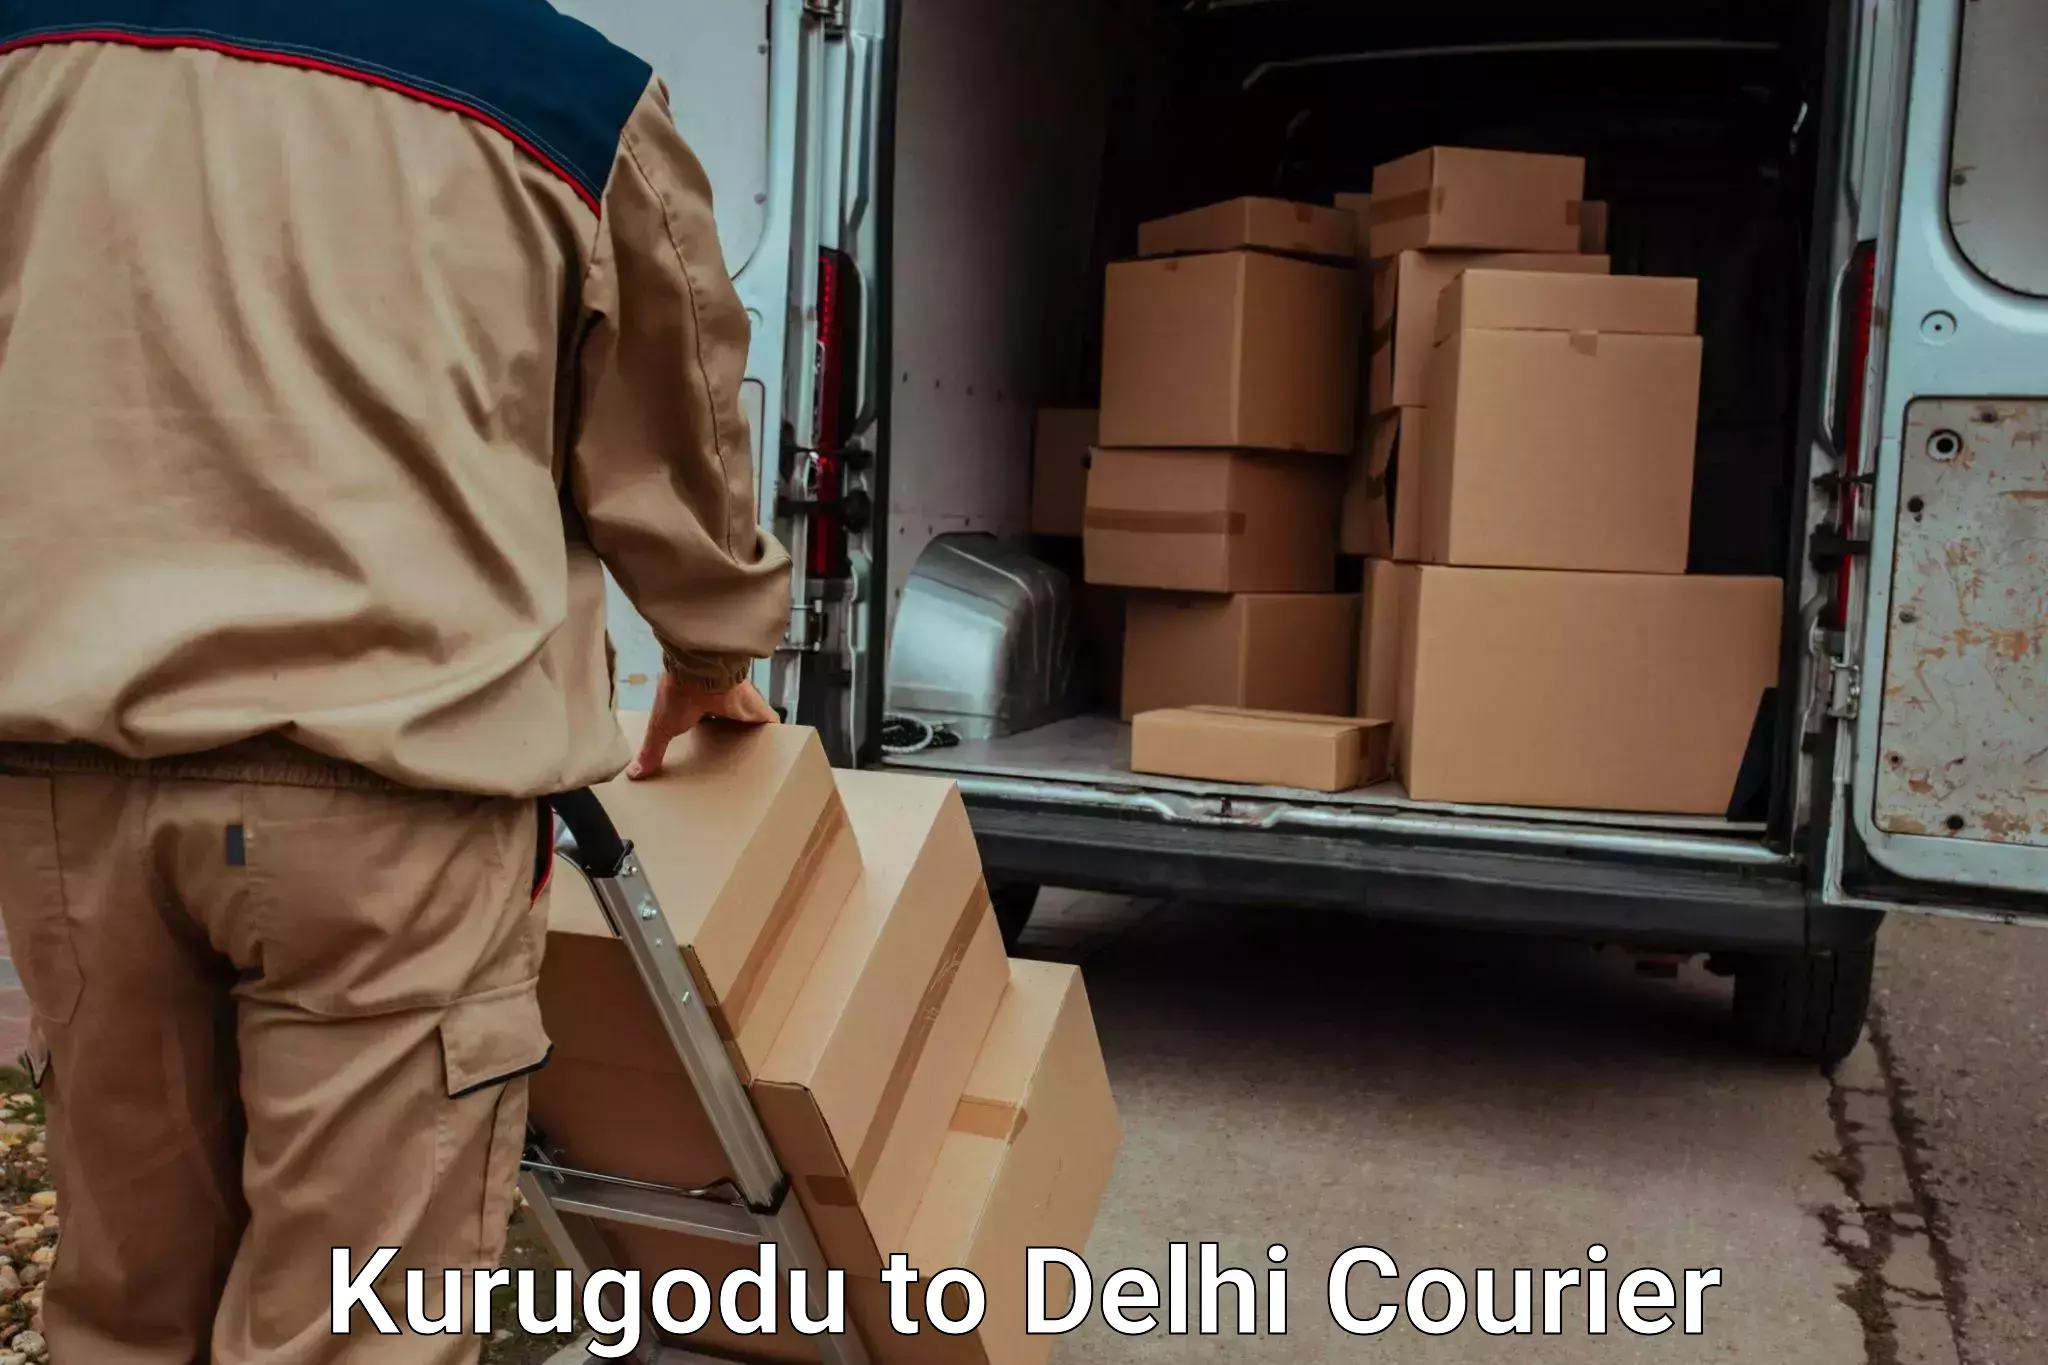 Doorstep luggage pickup Kurugodu to Delhi